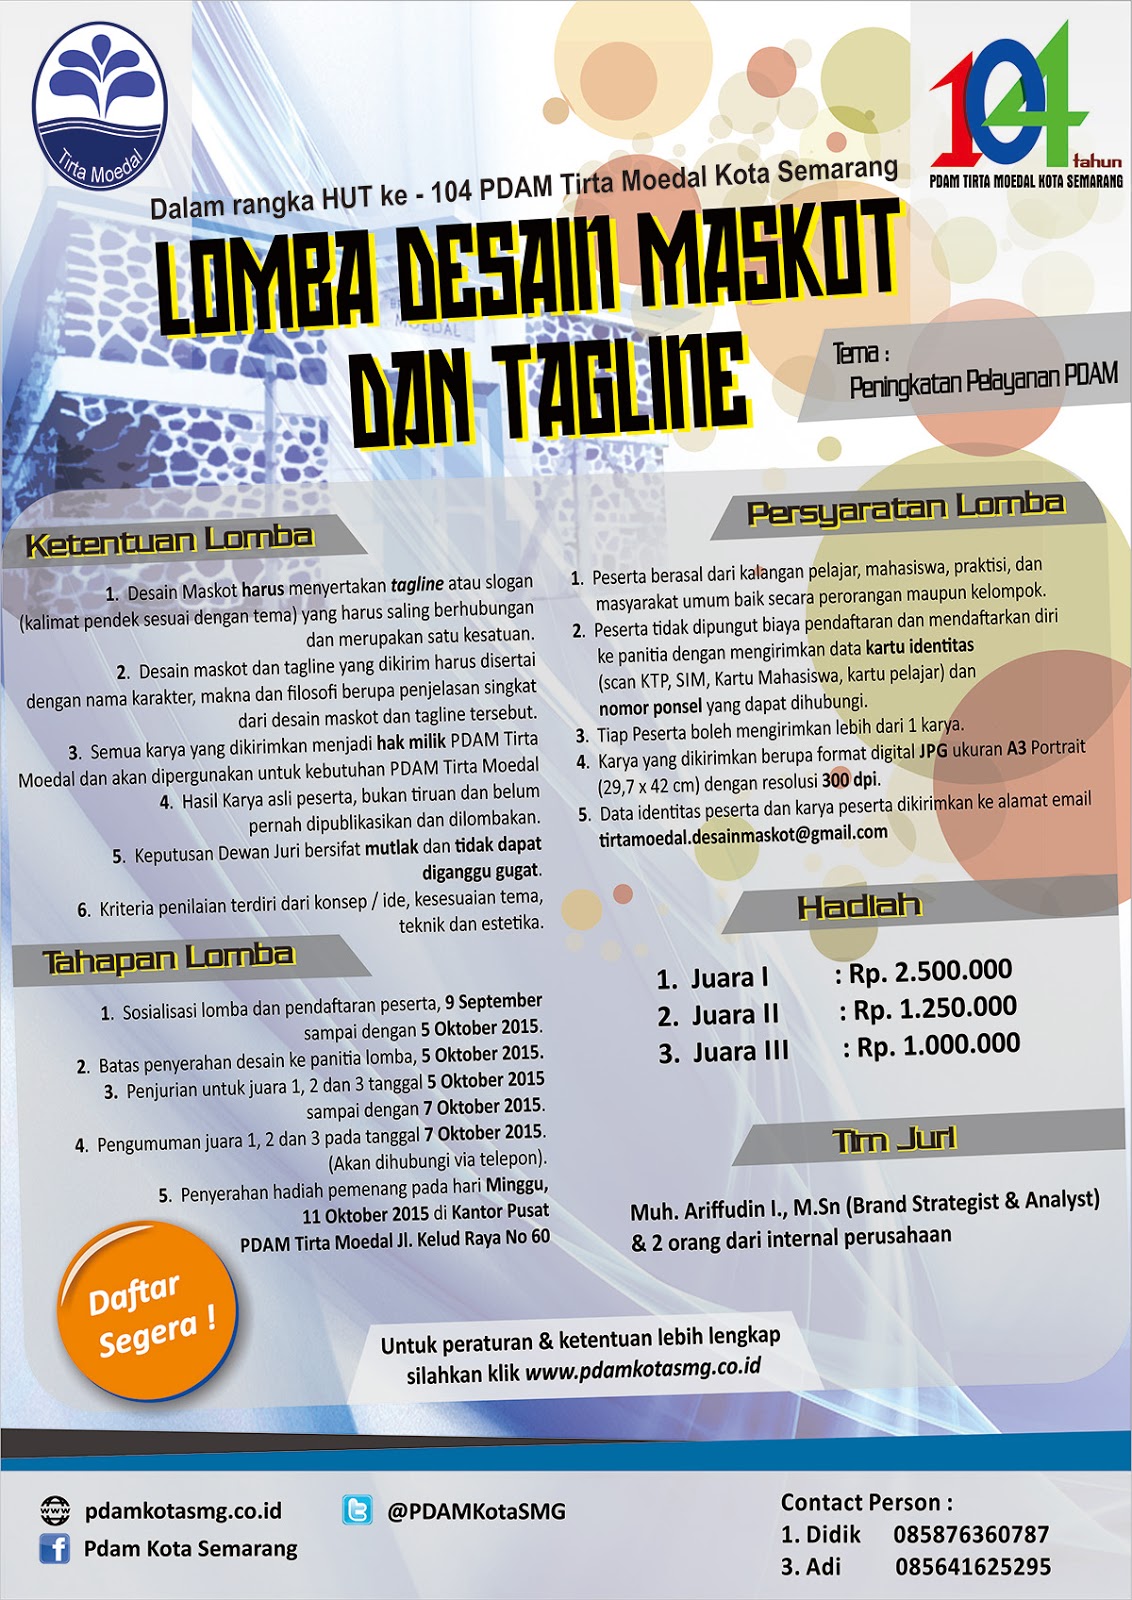 Lomba desain maskot tagline  PDAM Semarang